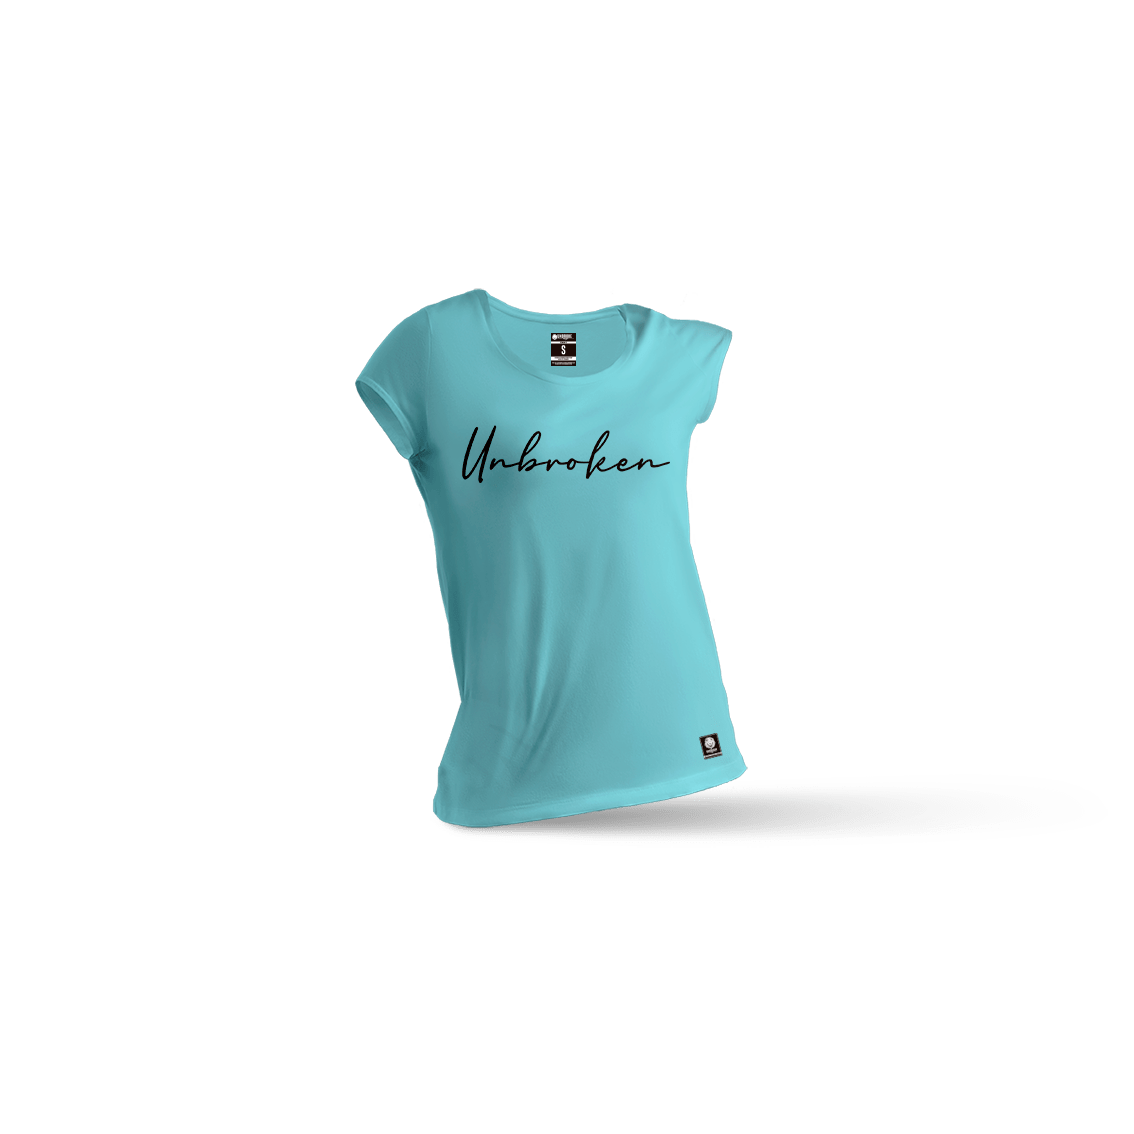 Camiseta Unbroken elegance women - Unbroken Sports Wear 